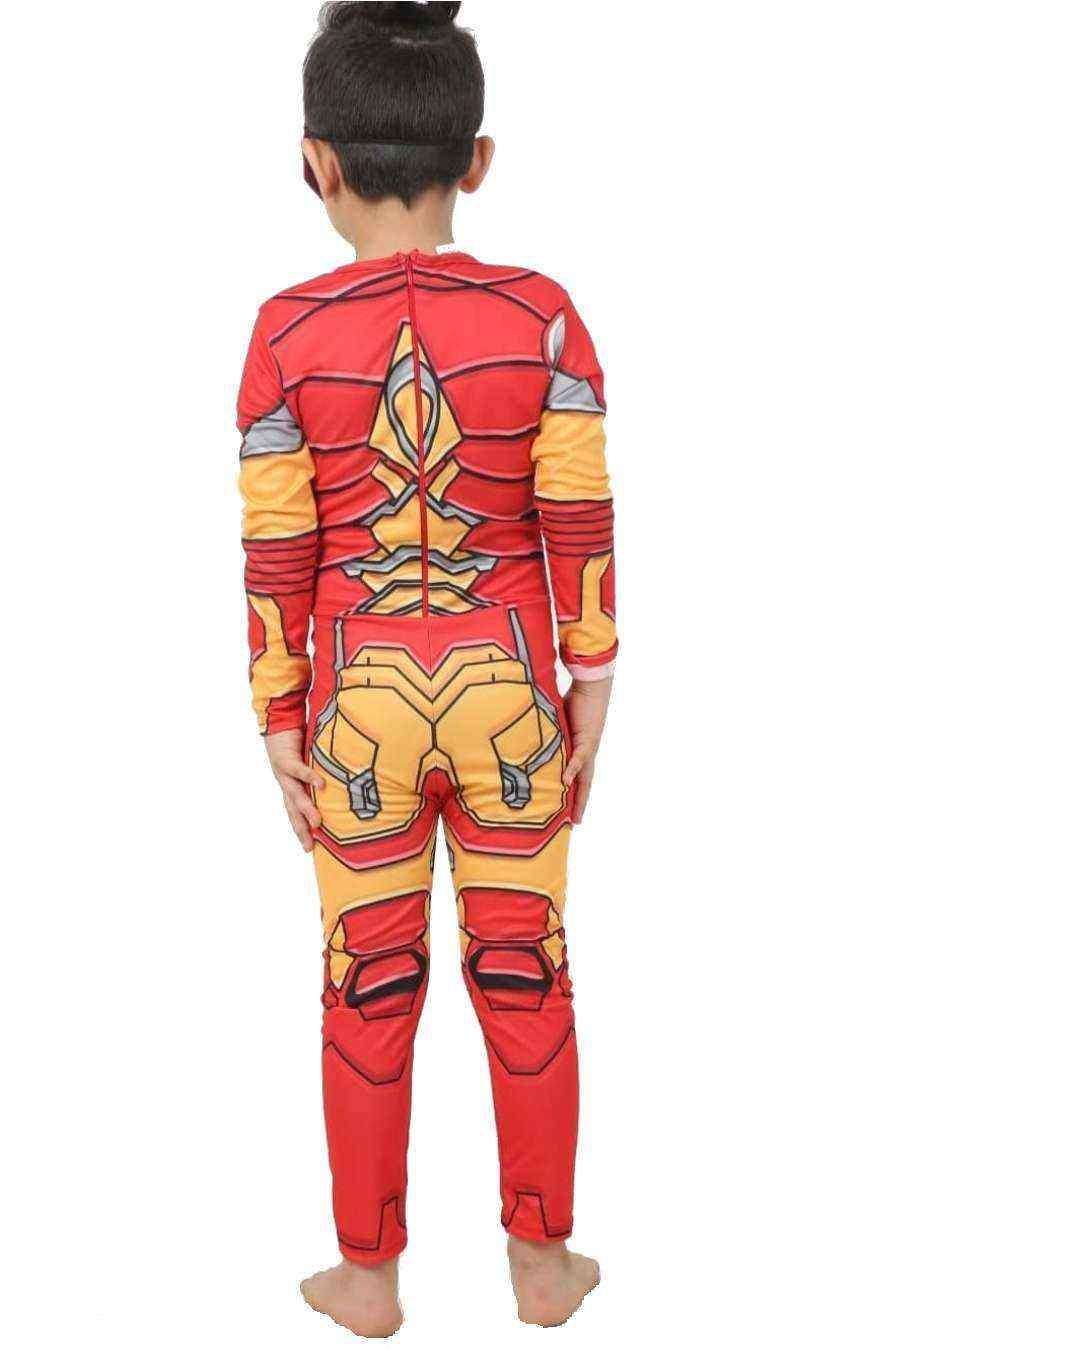 Demir Adam Kostümü | Iron Man Costume